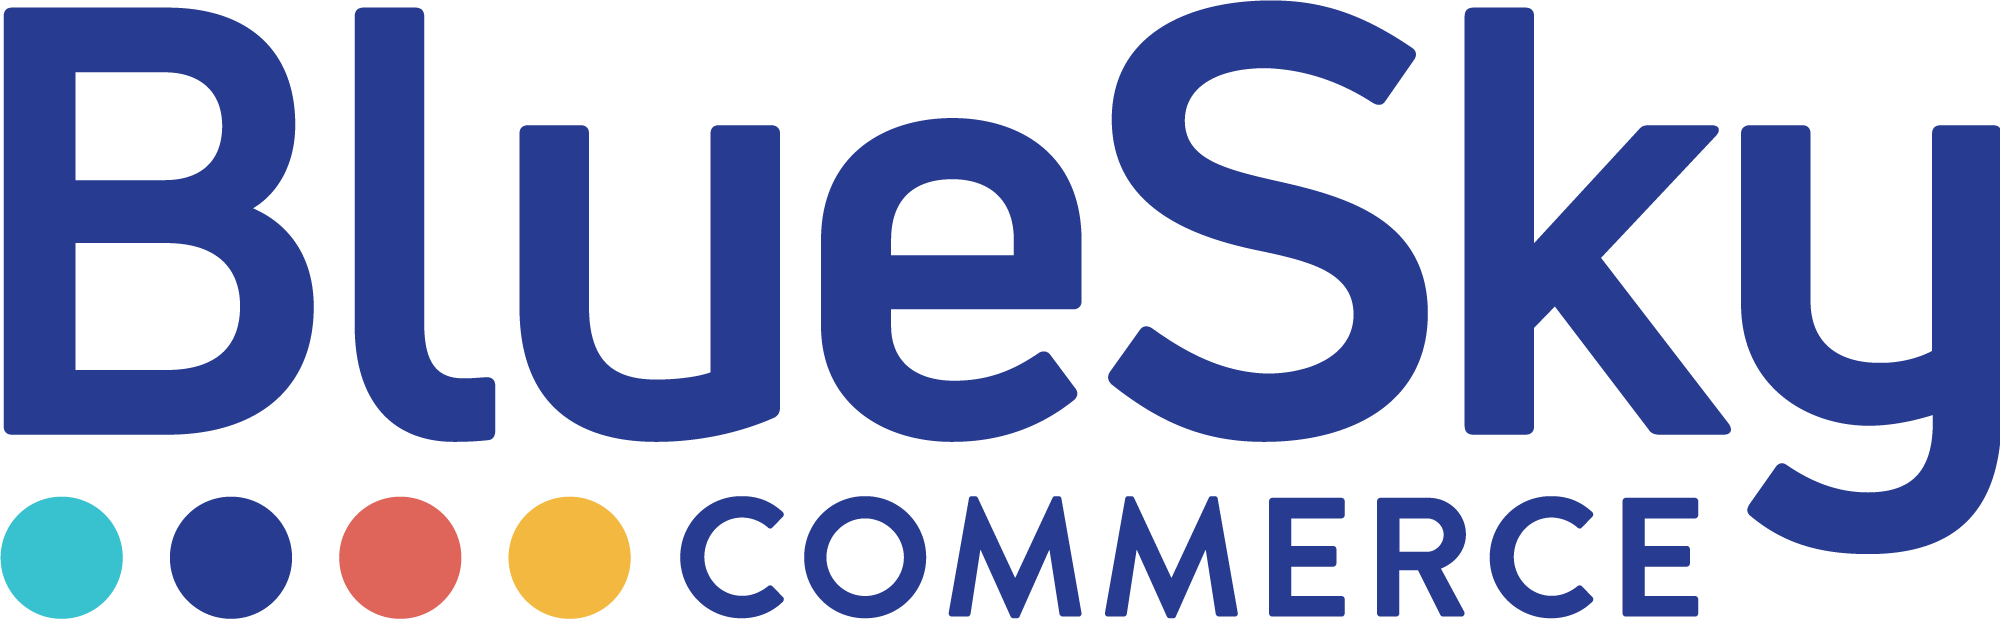 BlueSky-Commerce-Logo_CMYK-on-white (1).png